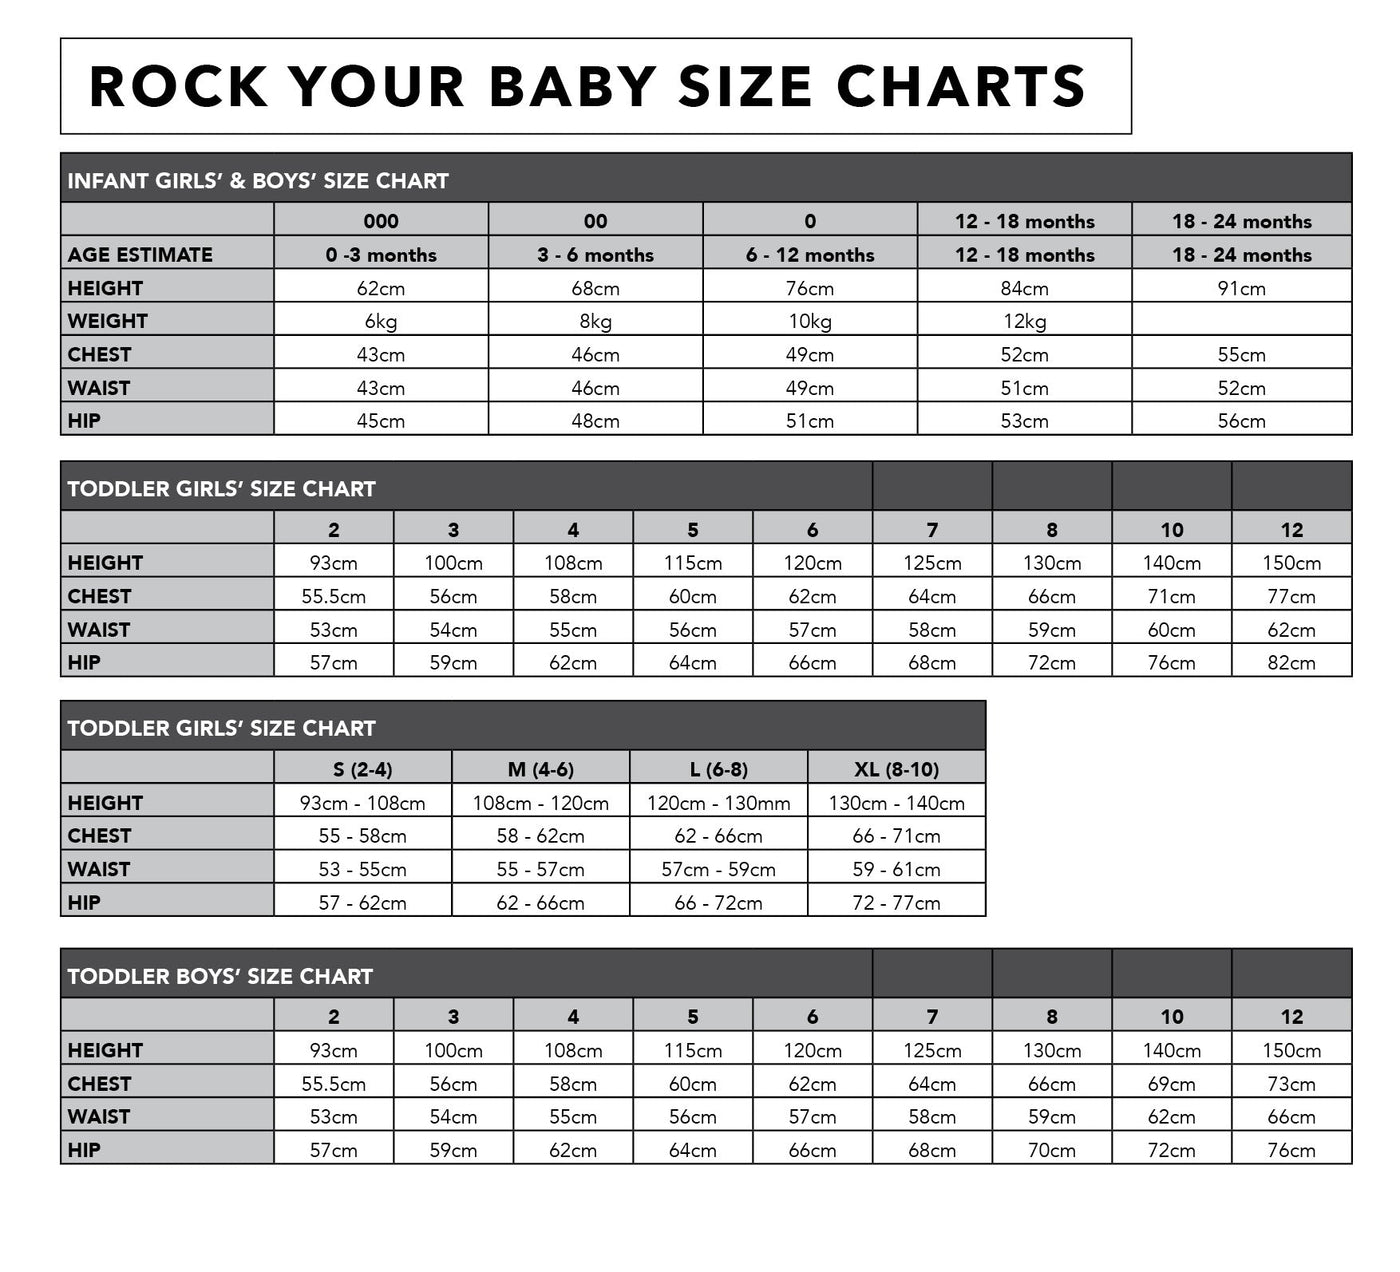 Tiger Skin Cardigan - Multi Cardigan Rock Your Baby 